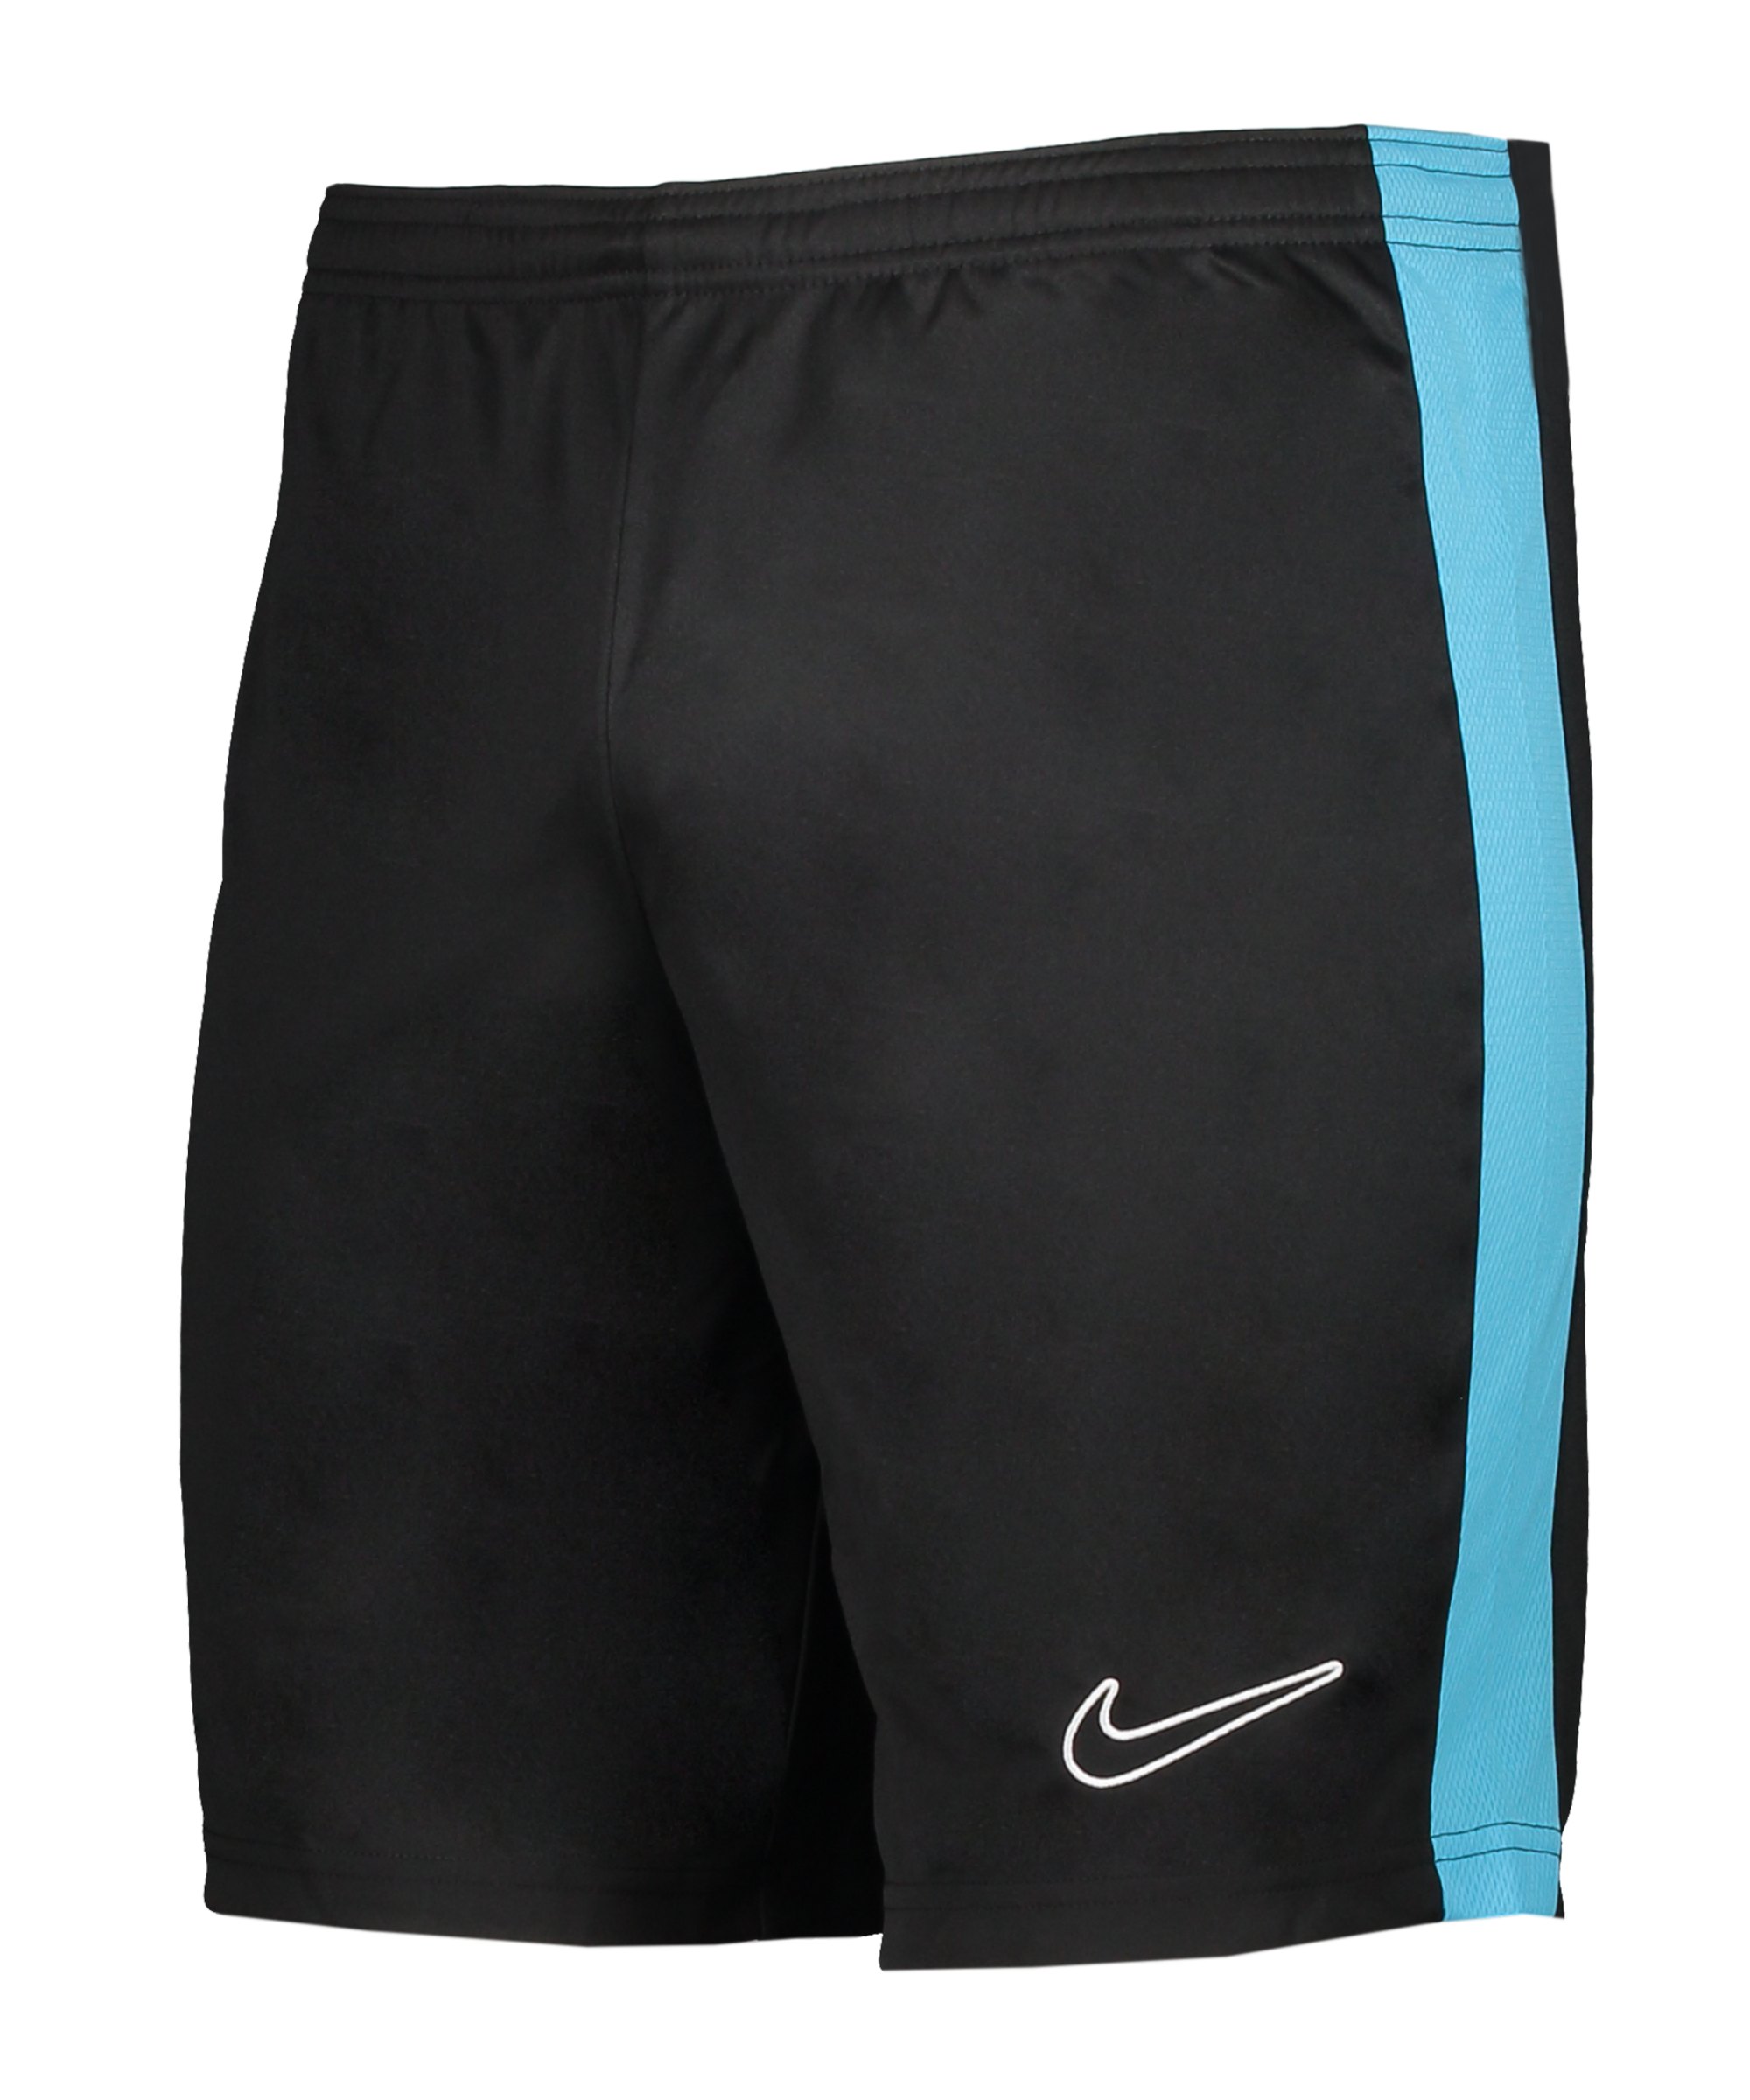 Nike Academy Short Schwarz F013 - schwarz